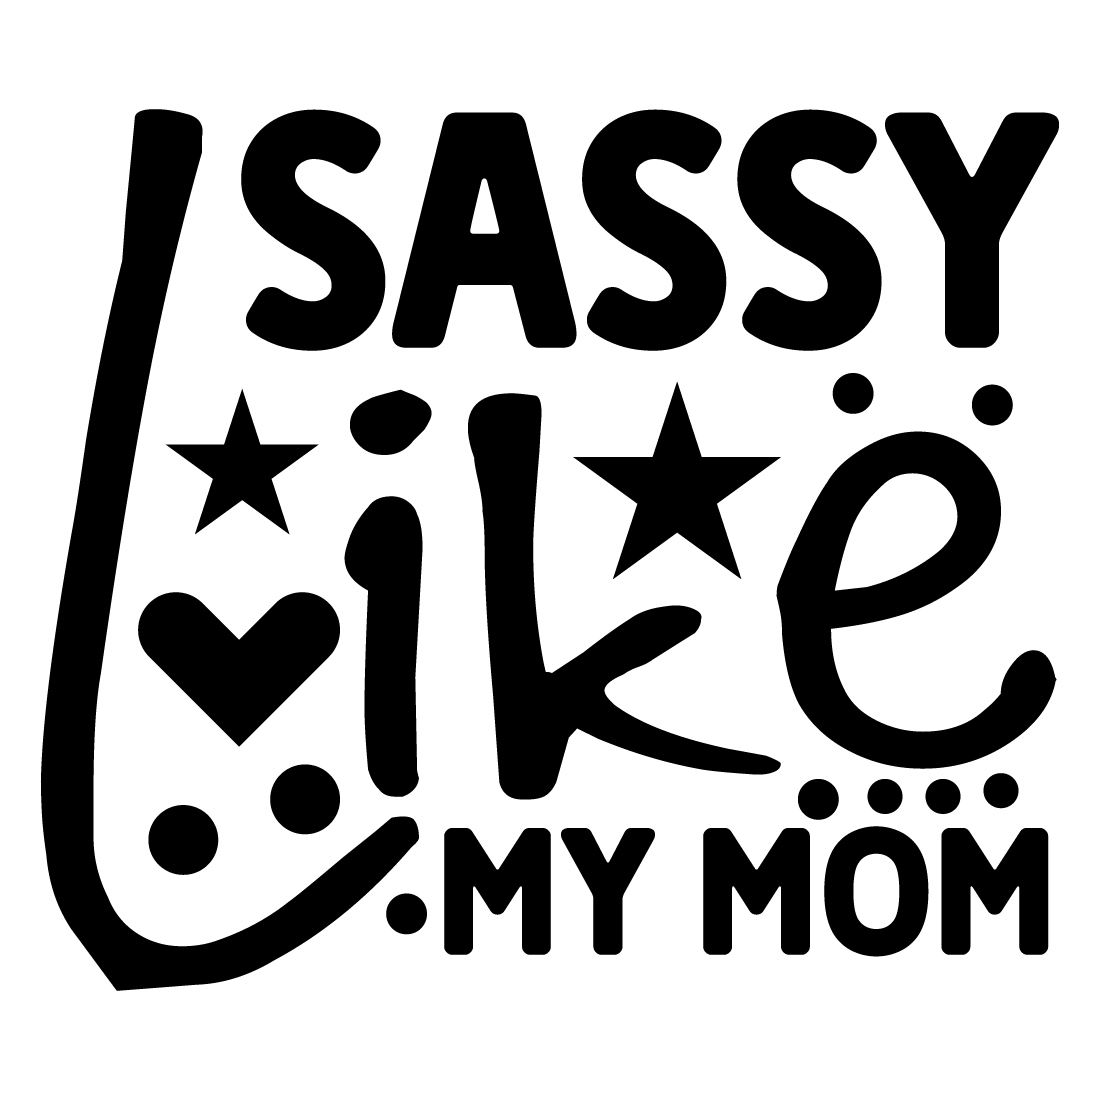 Sassy Like My Mom cover image.